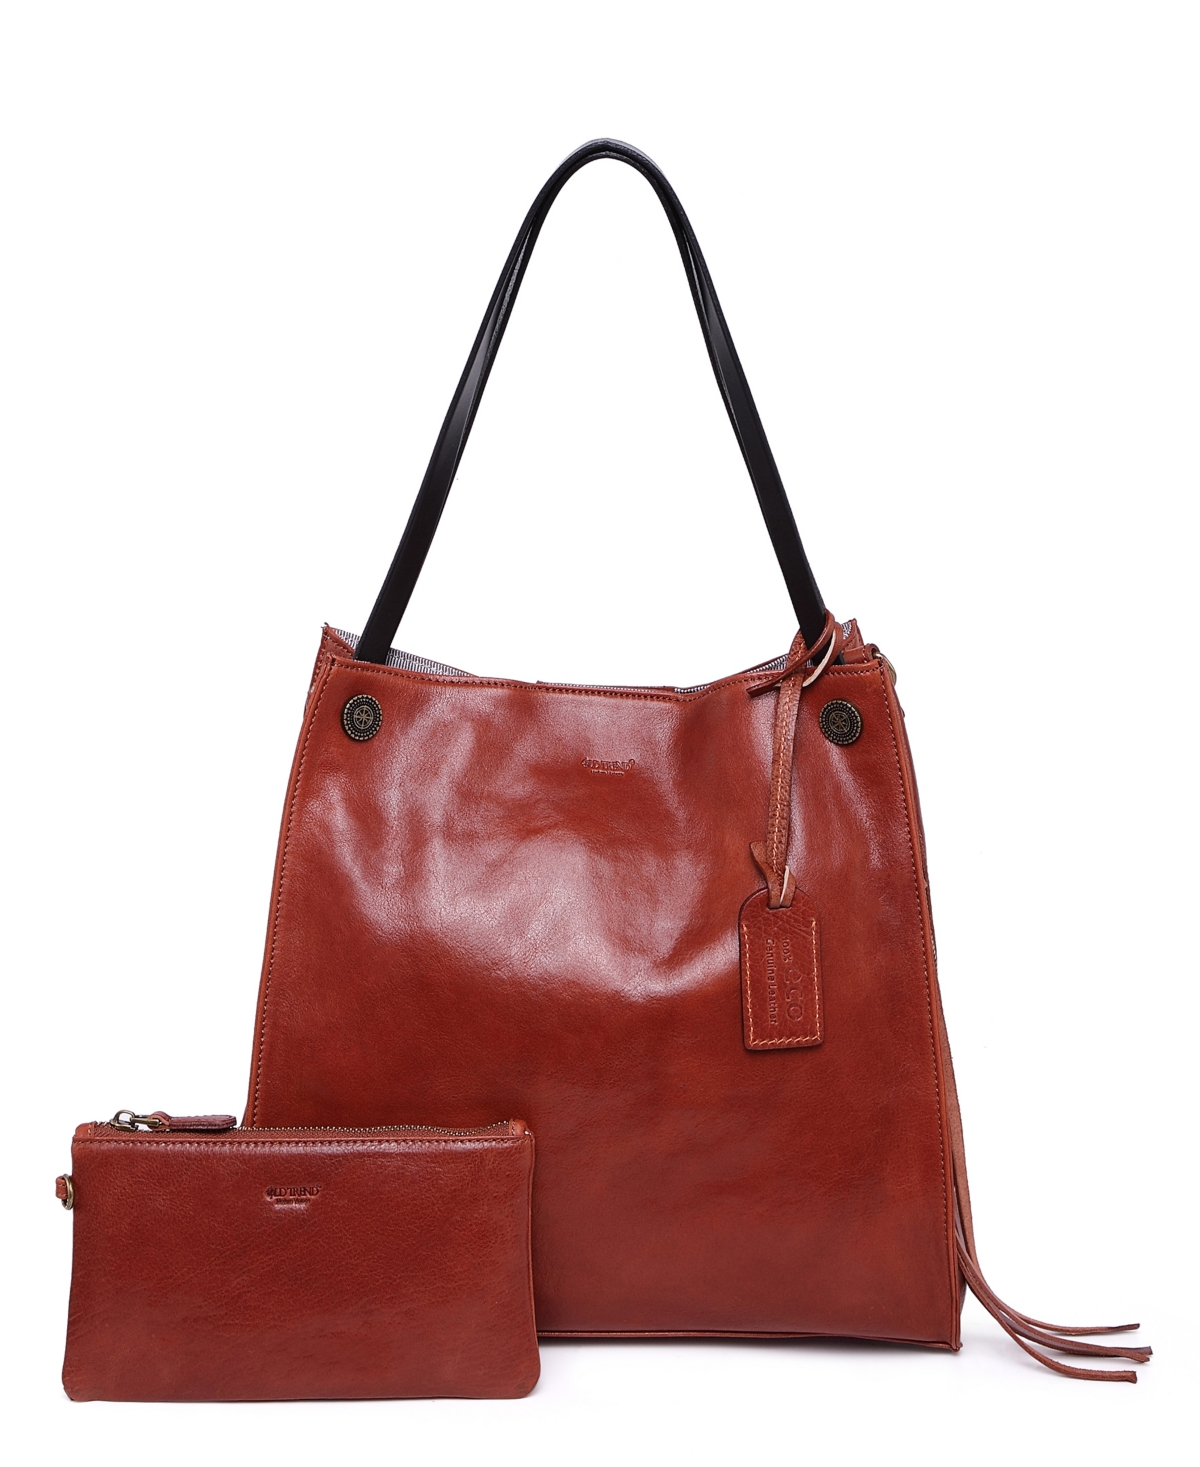 Women's Genuine Leather Daisy Tote Bag - Cognac